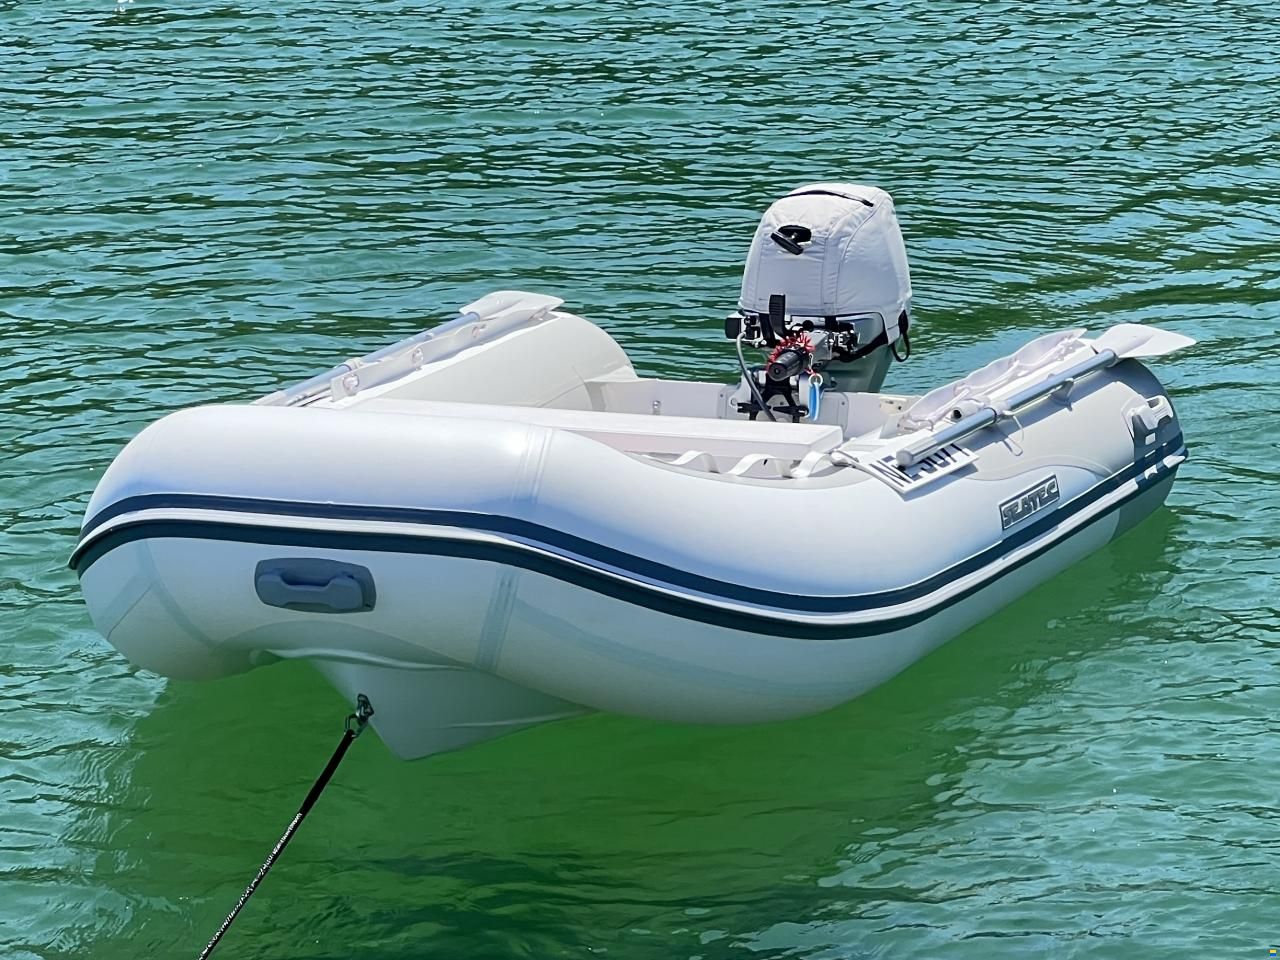 SEATEC Inflatable Boat Repair Kit from 20,95 €